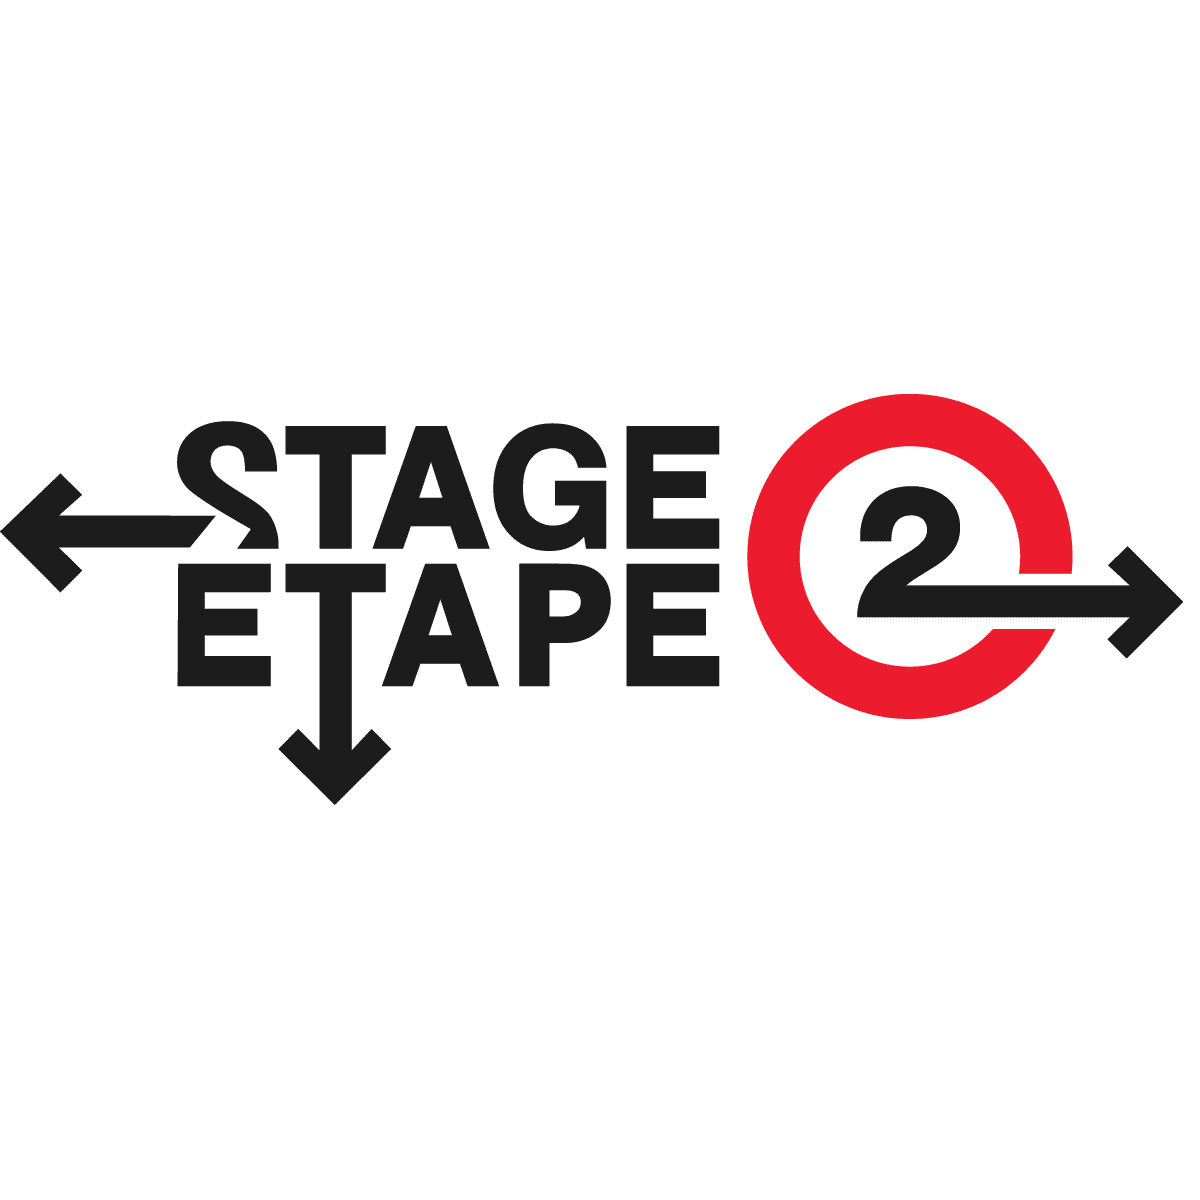 Stage2_Logo_300dpi_20190719-195311_1